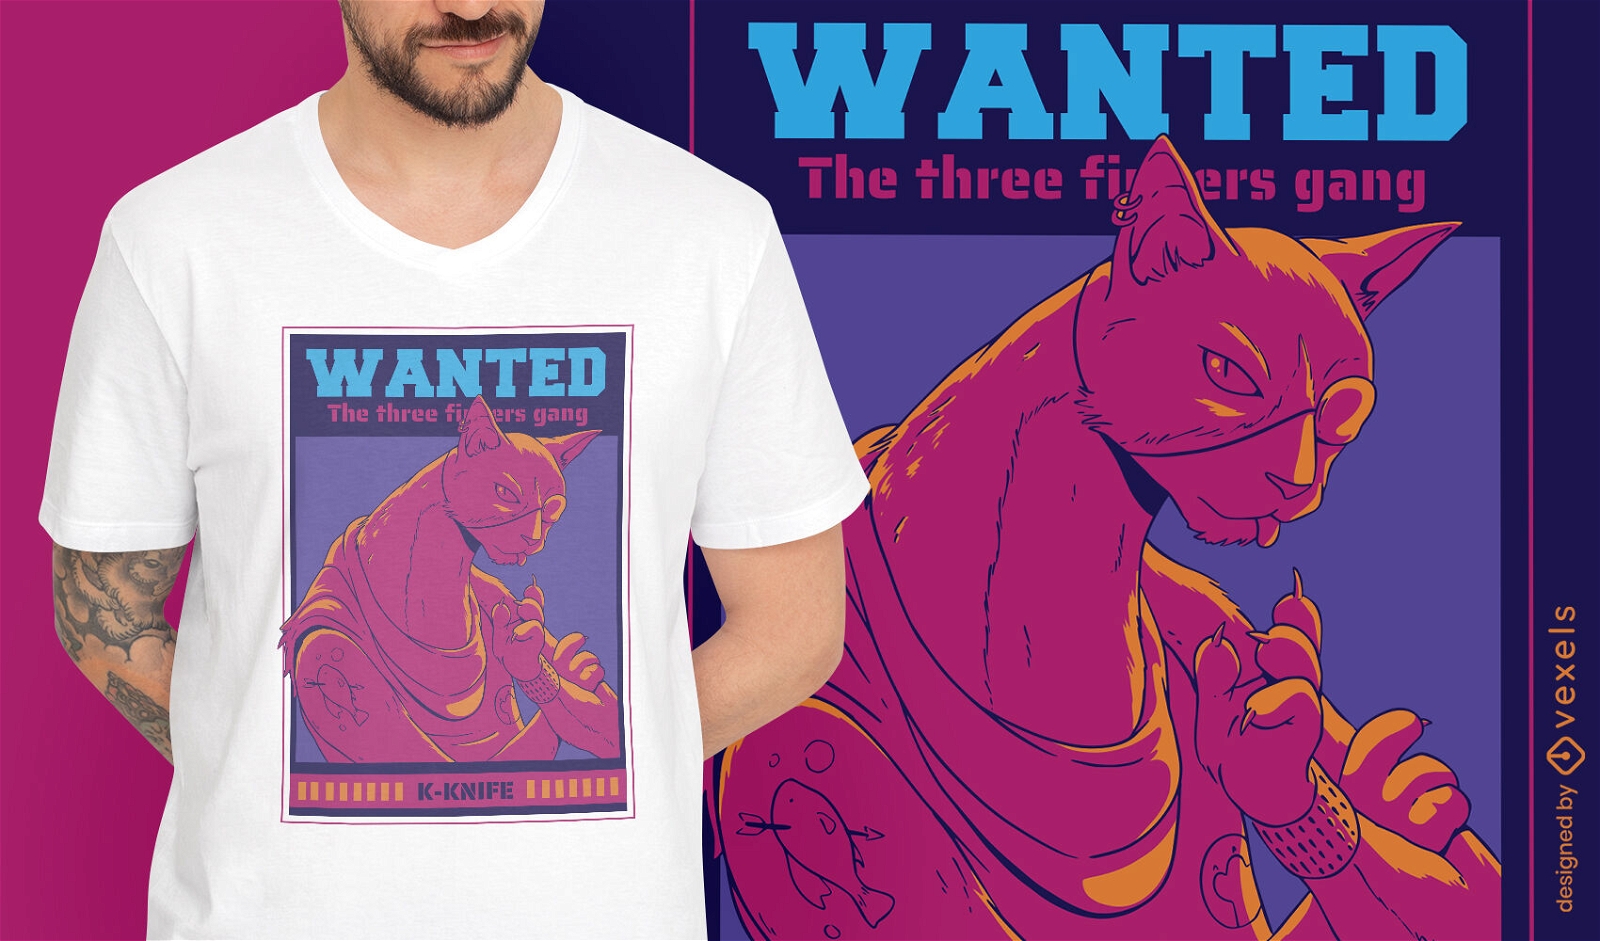 Cat animal mafia gang t-shirt design